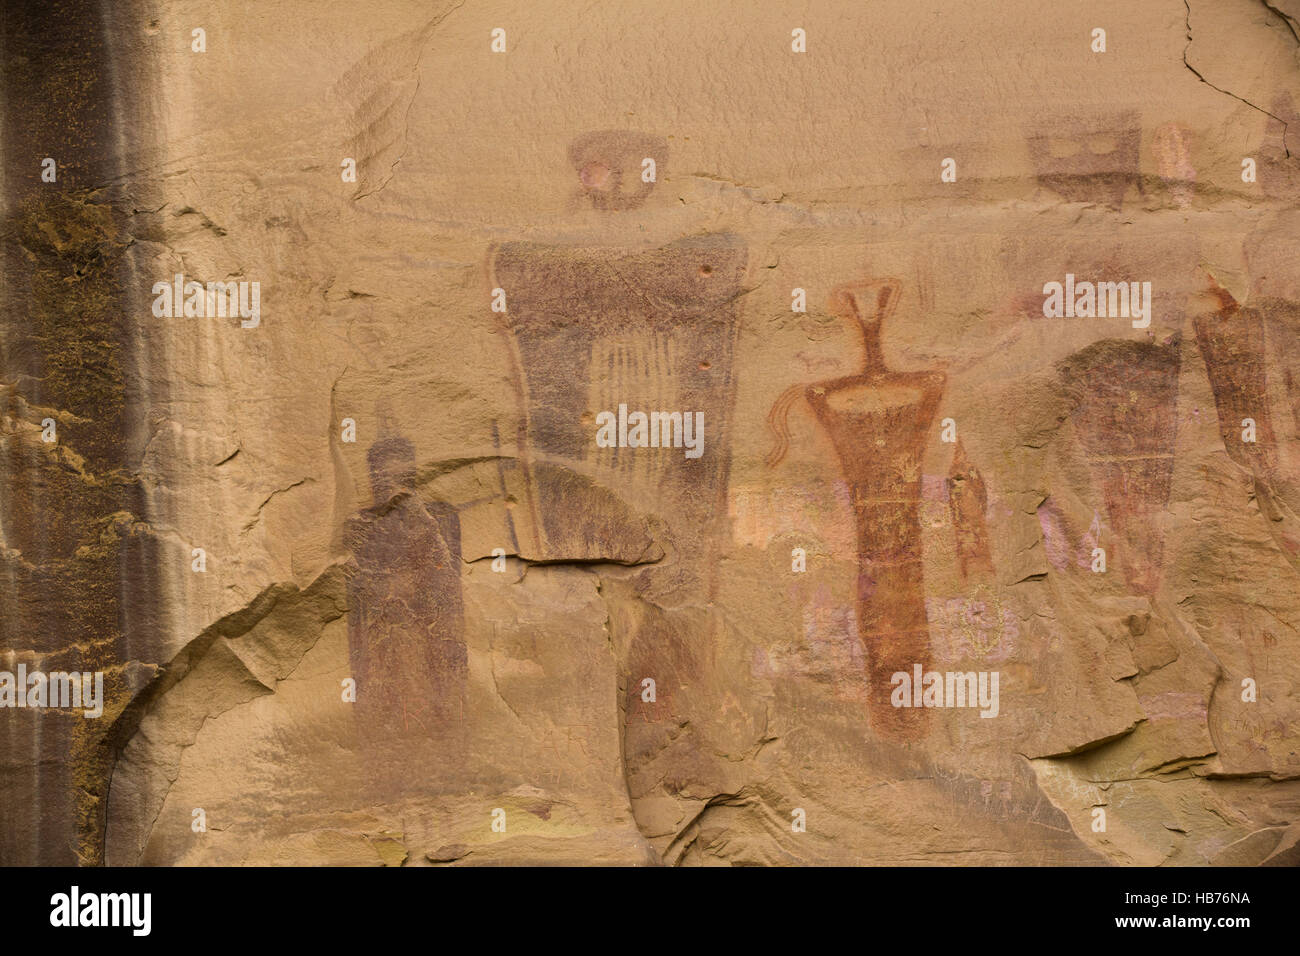 Anthropomorphen Formen, Piktogramme, Barrier Canyon Reef Stil, 6000 v. Chr. bis 100 v. Chr., Sego Canyon, Utah, USA Stockfoto